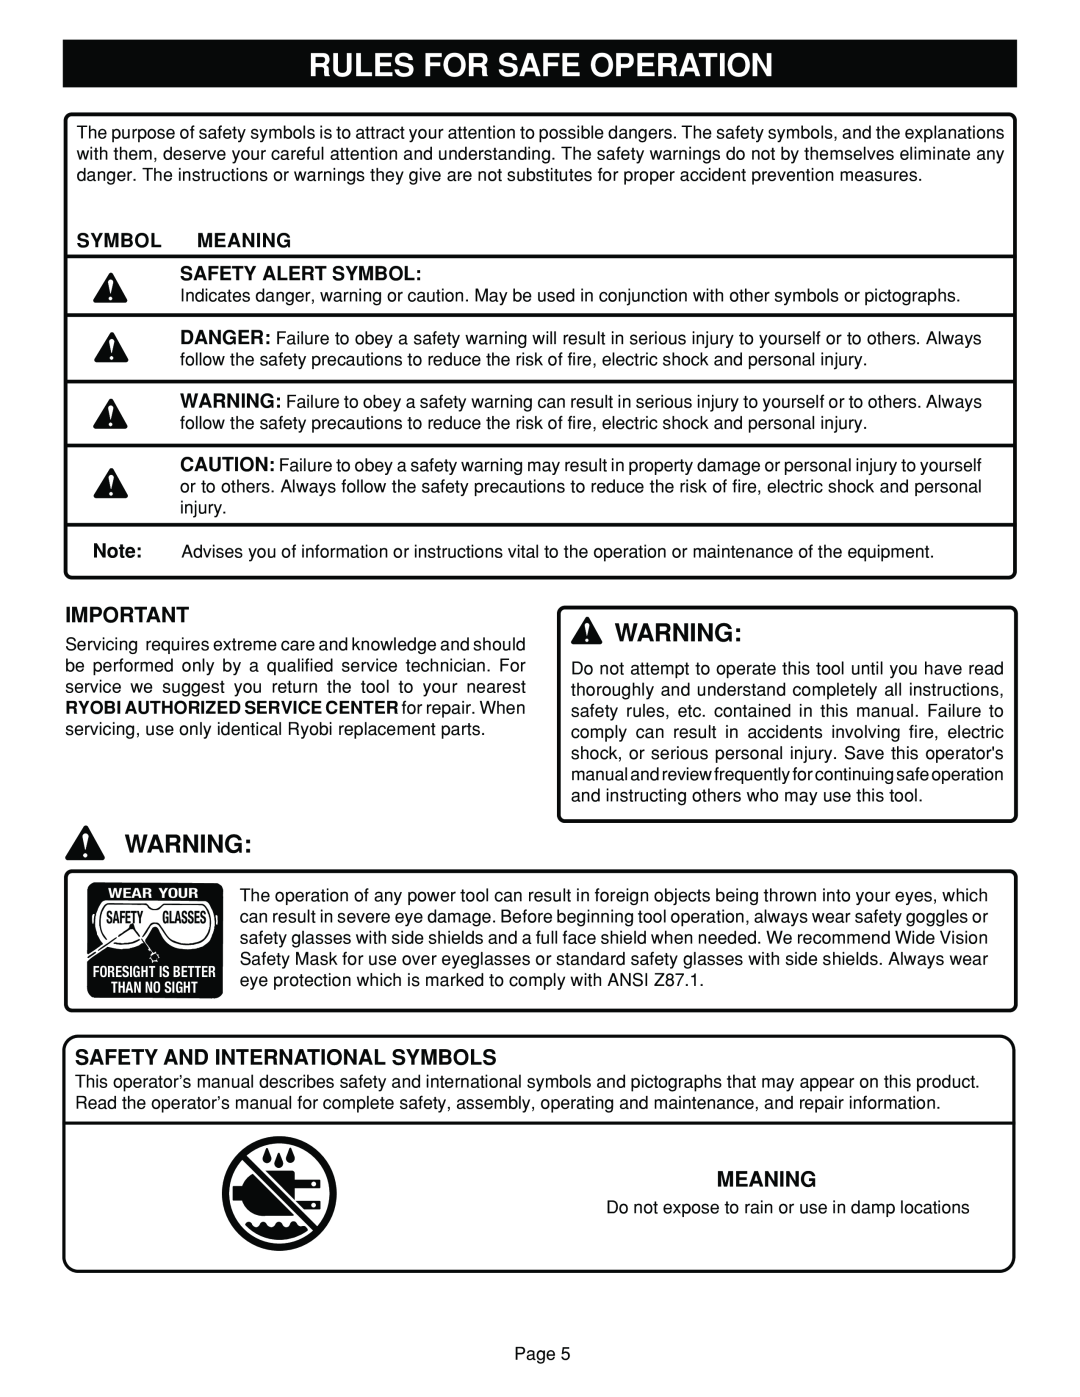 Ryobi SC180VS manual Safety And International Symbols, Symbol Meaning Safety Alert Symbol, Rules For Safe Operation 